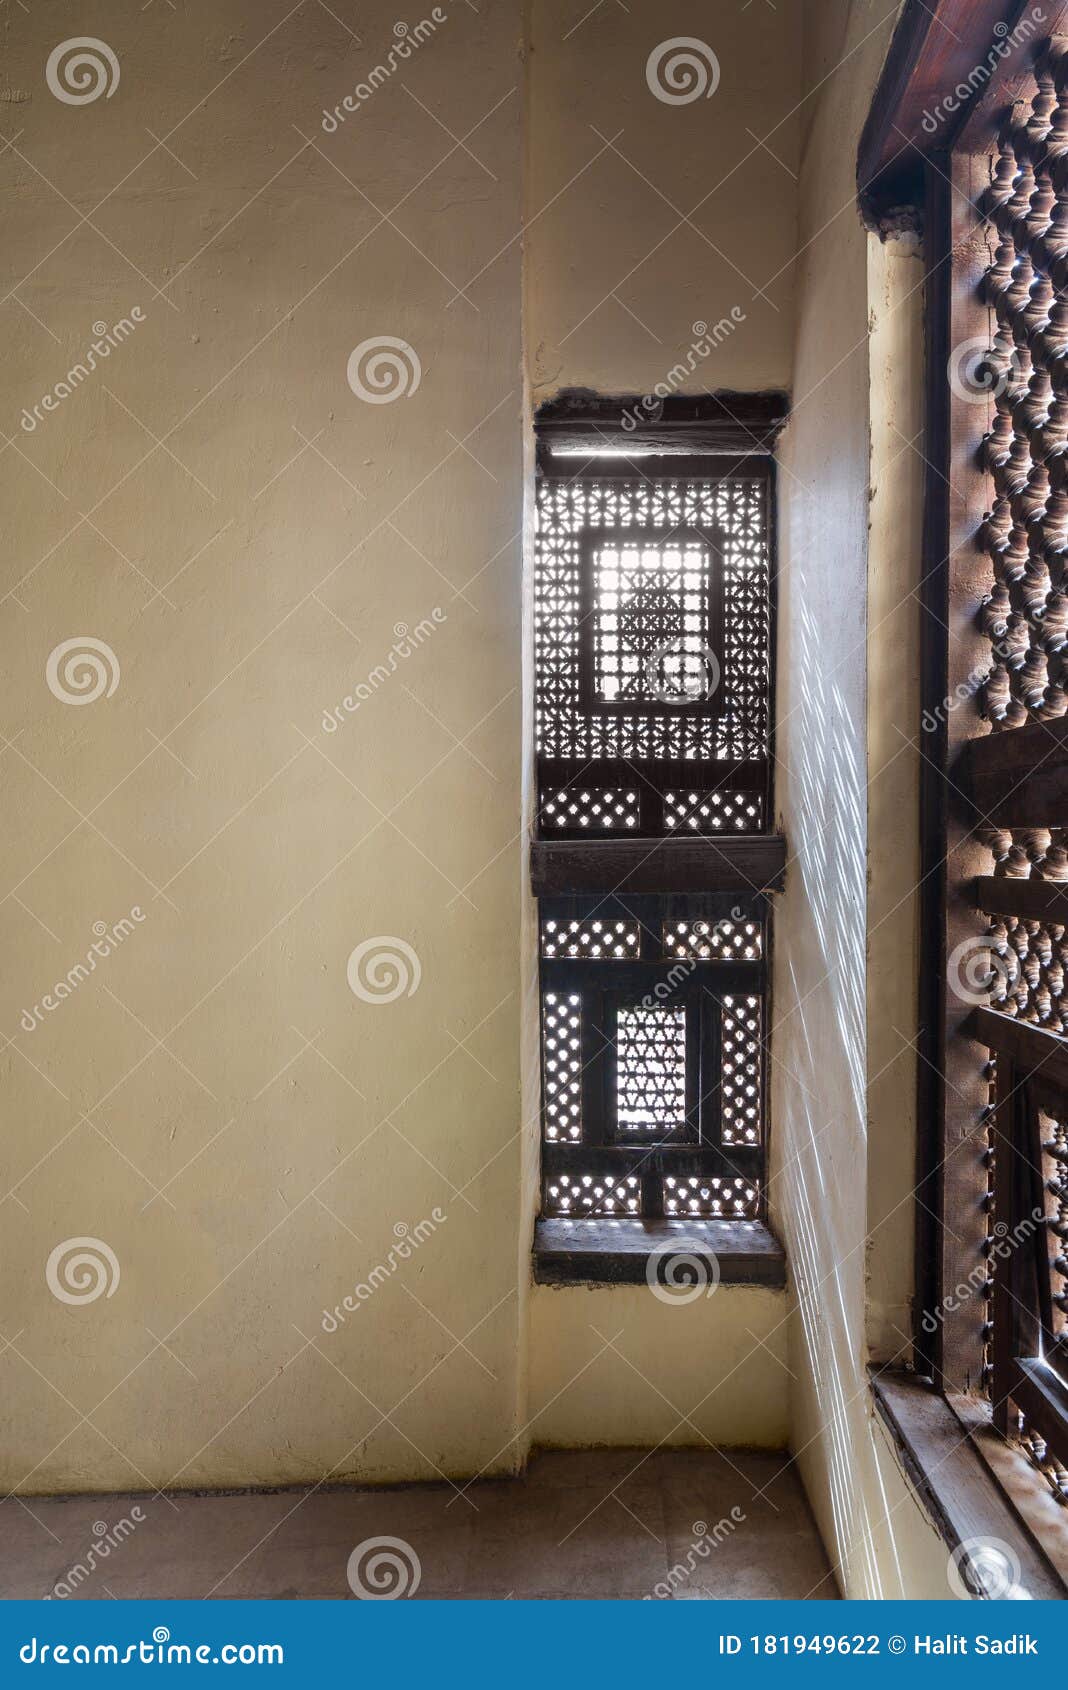 corner of two interleaved wooden ornate windows - mashrabiya - in stone wall